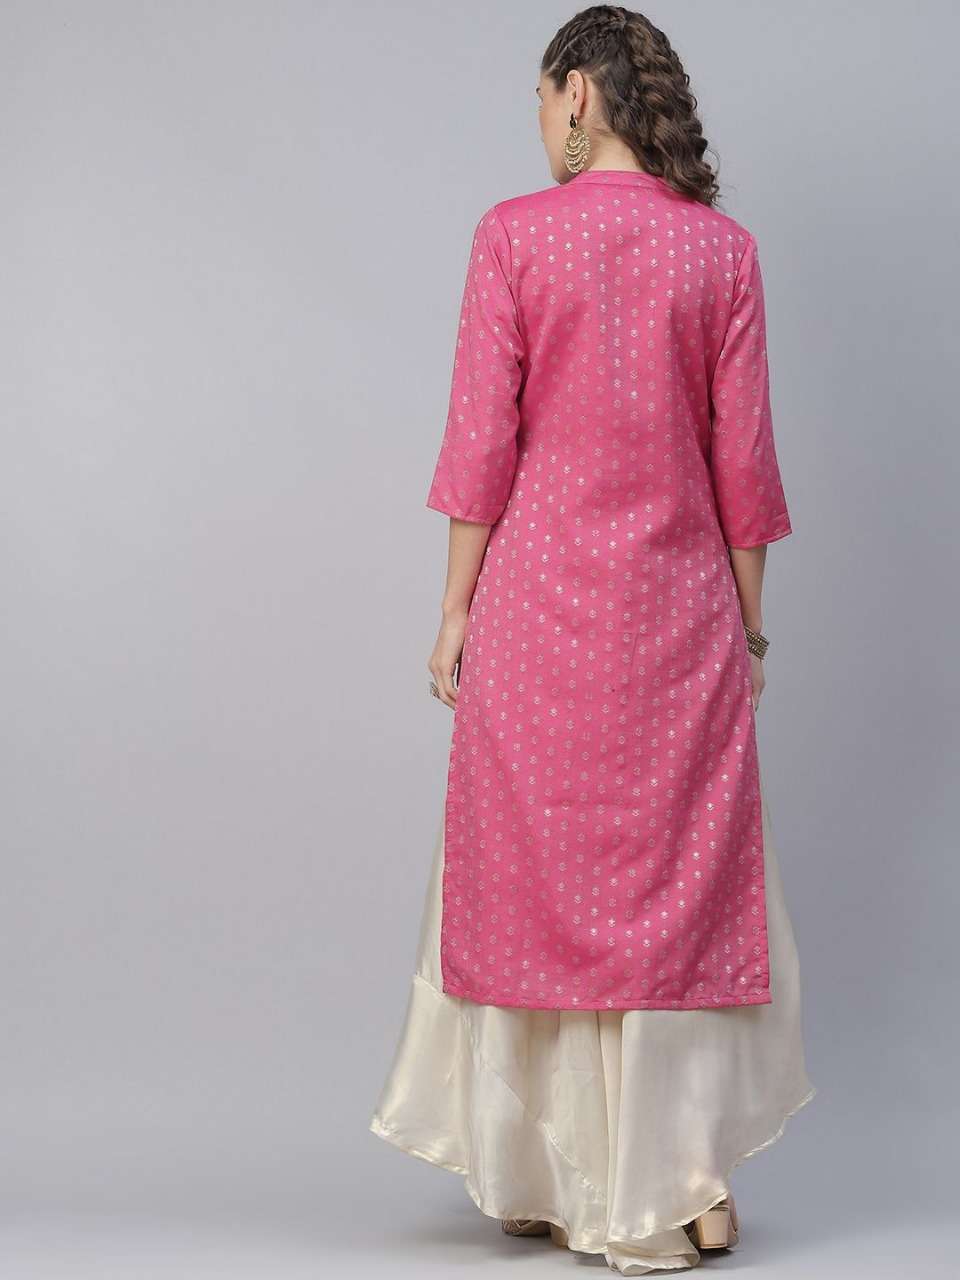 Sabella Fashion Cotton Queen 401 Catalog Ethnic Wear Straight Cut Long Kurtis 